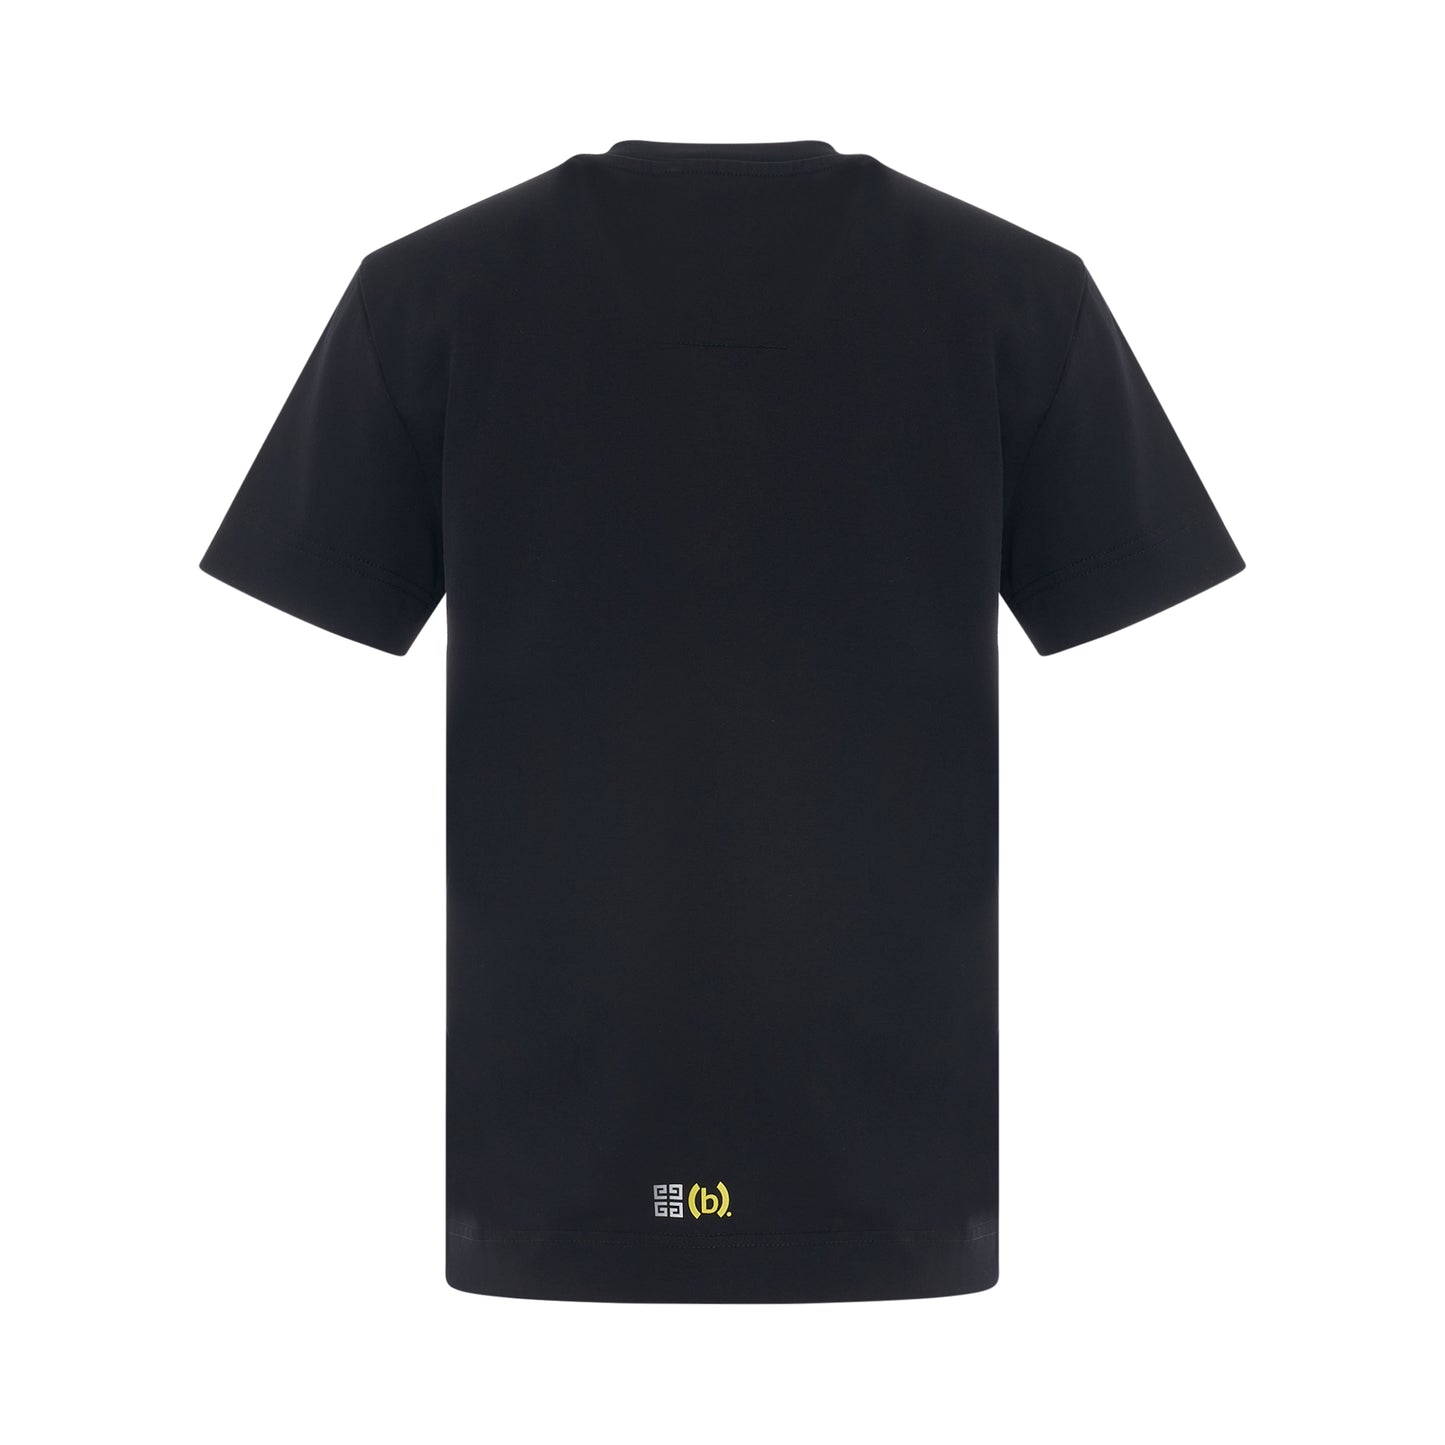 BSTROY Circle Logo Slim Fit T-Shirt in Black